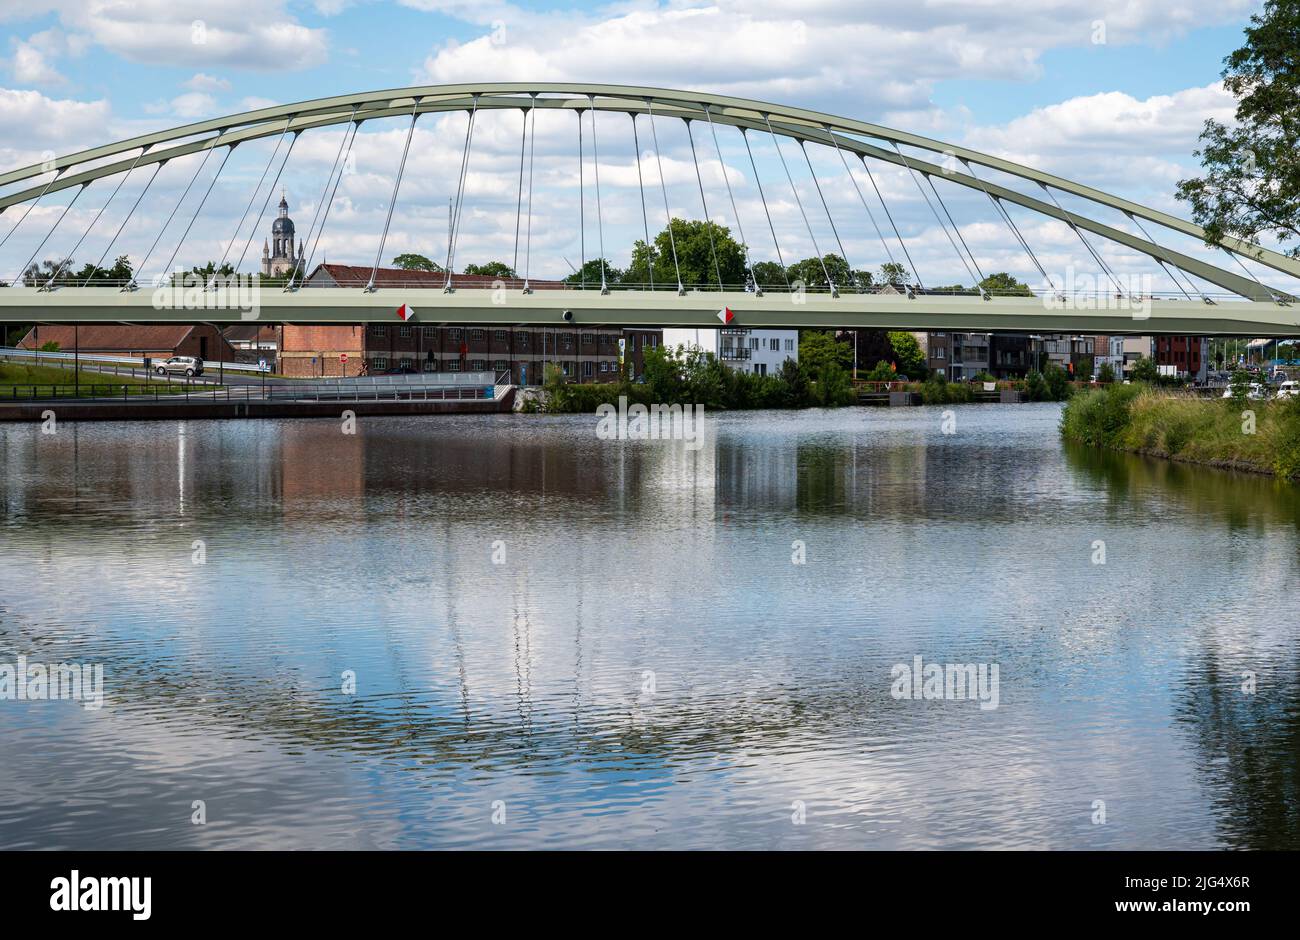 Halle, Flemish Brabant Region, Belgium,  07 02 2022 - Bridge over the canal at the city suburbs Stock Photo